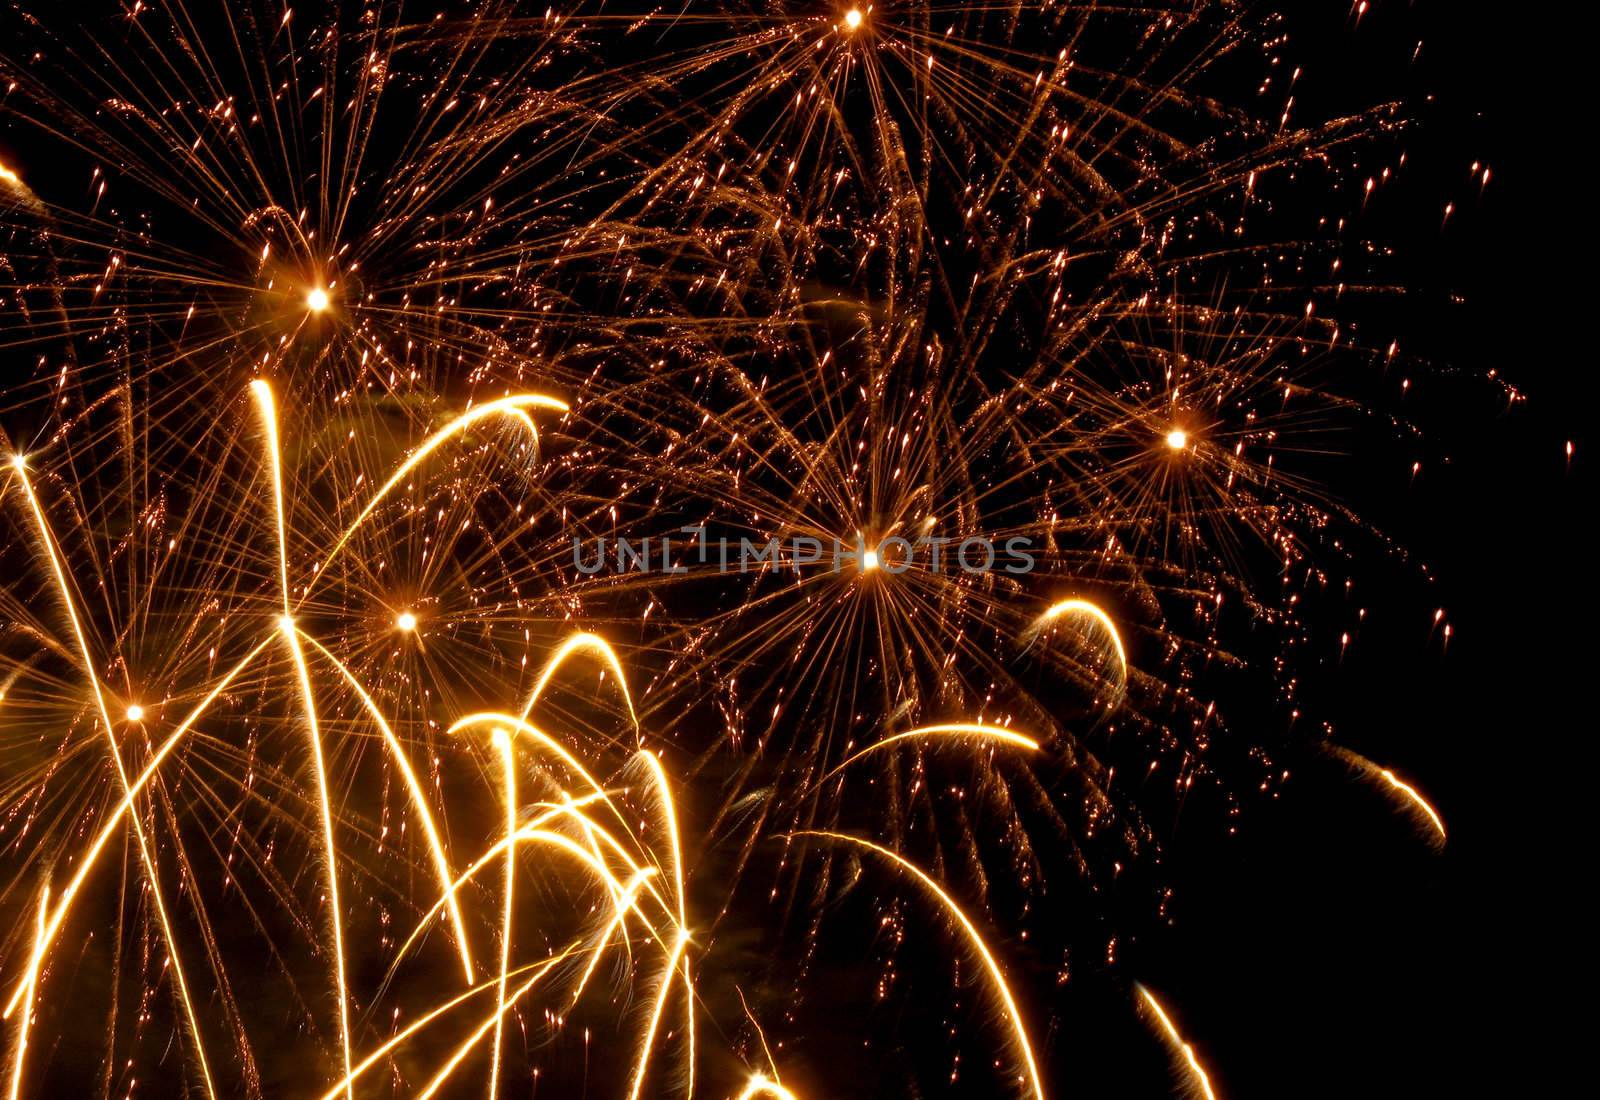 Gloden fireworks by tommroch